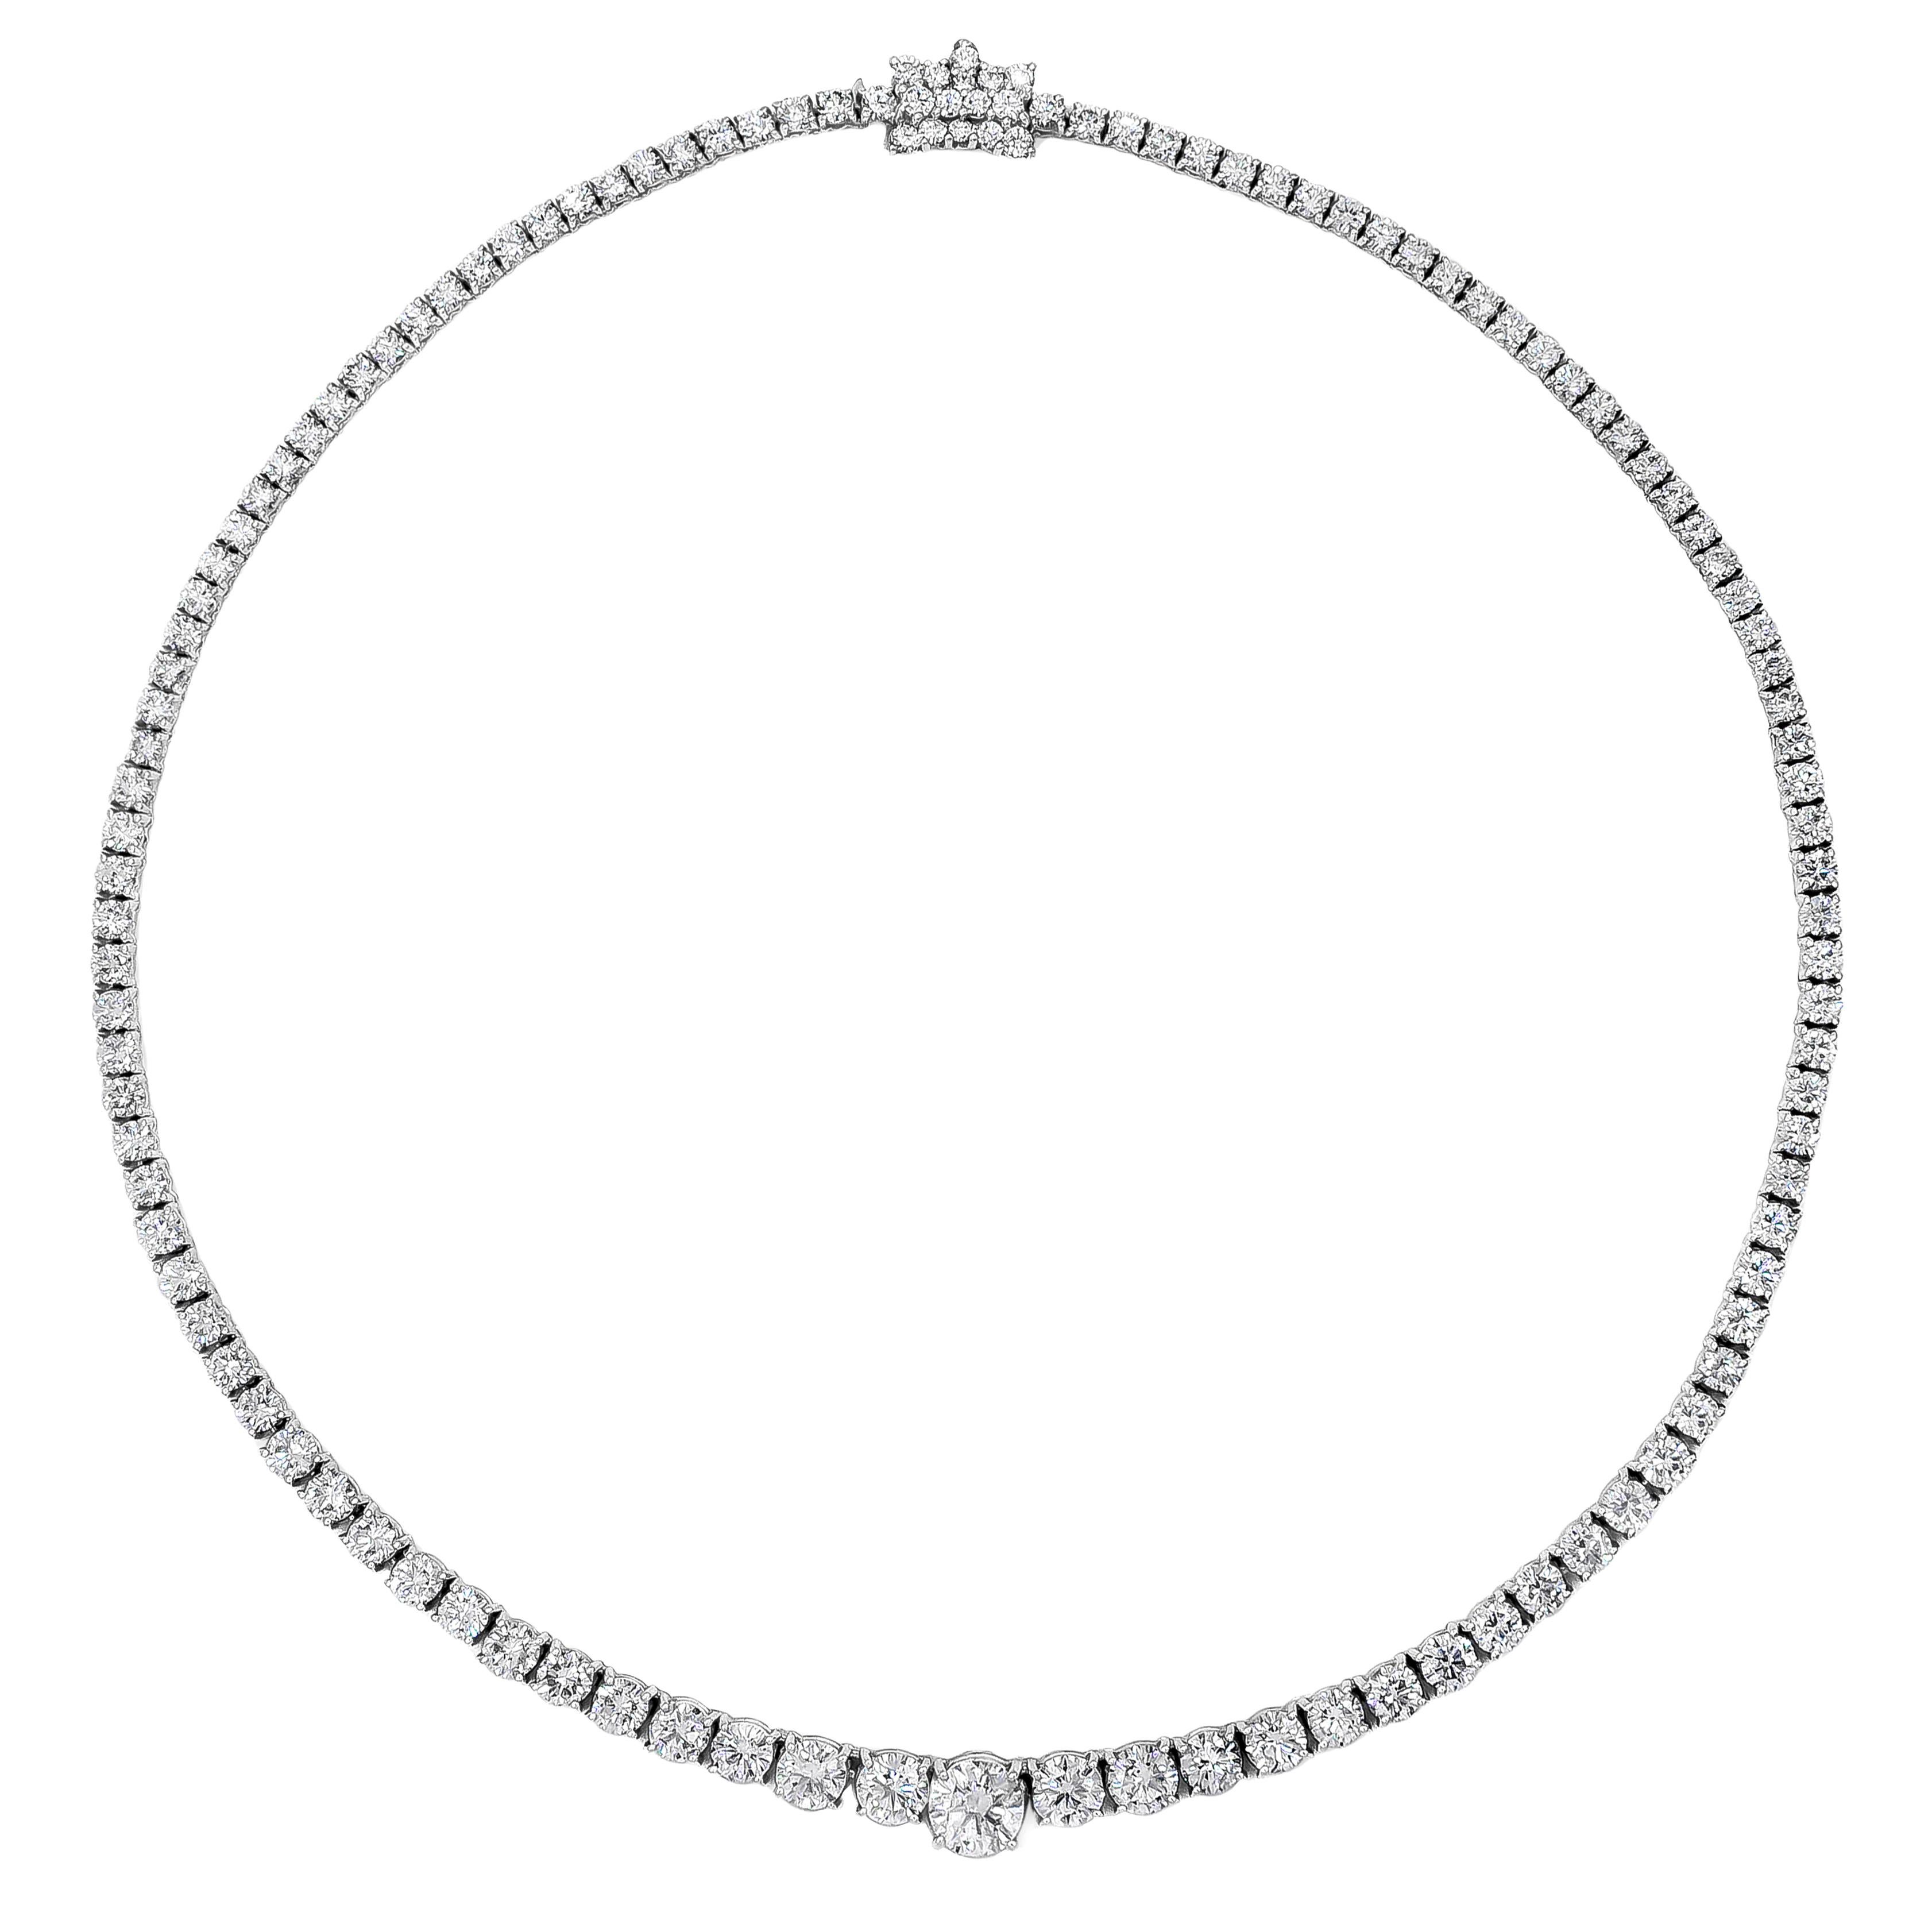 Contemporary Roman Malakov 19.61 Carat Total Graduating Round Diamond Riviere Tennis Necklace For Sale